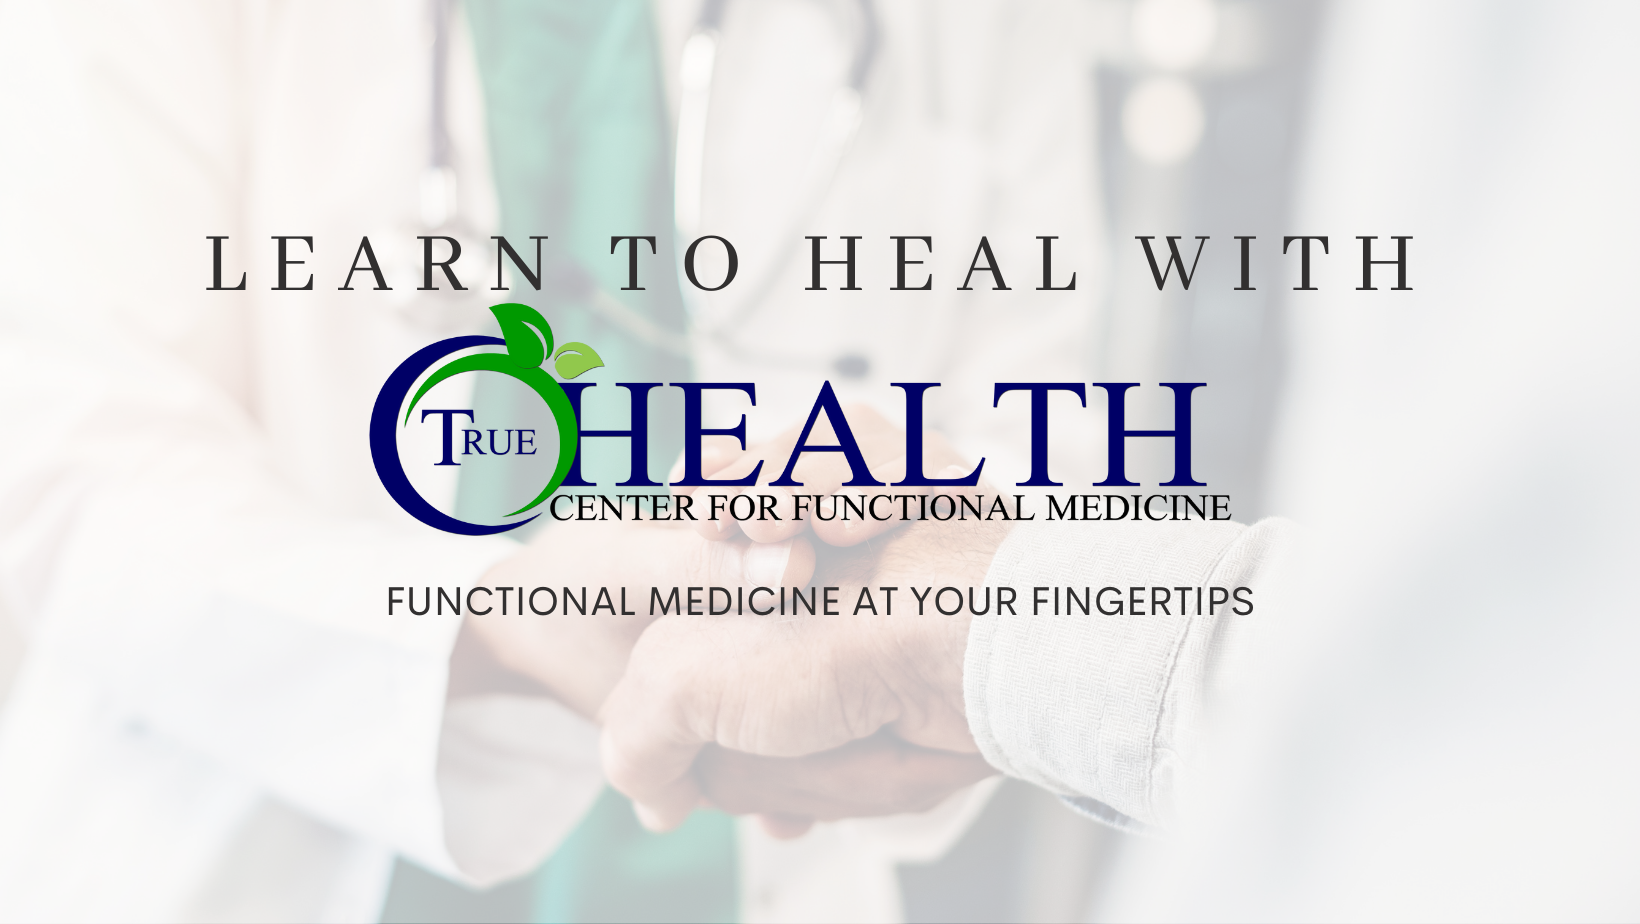 true health center for functional medicine